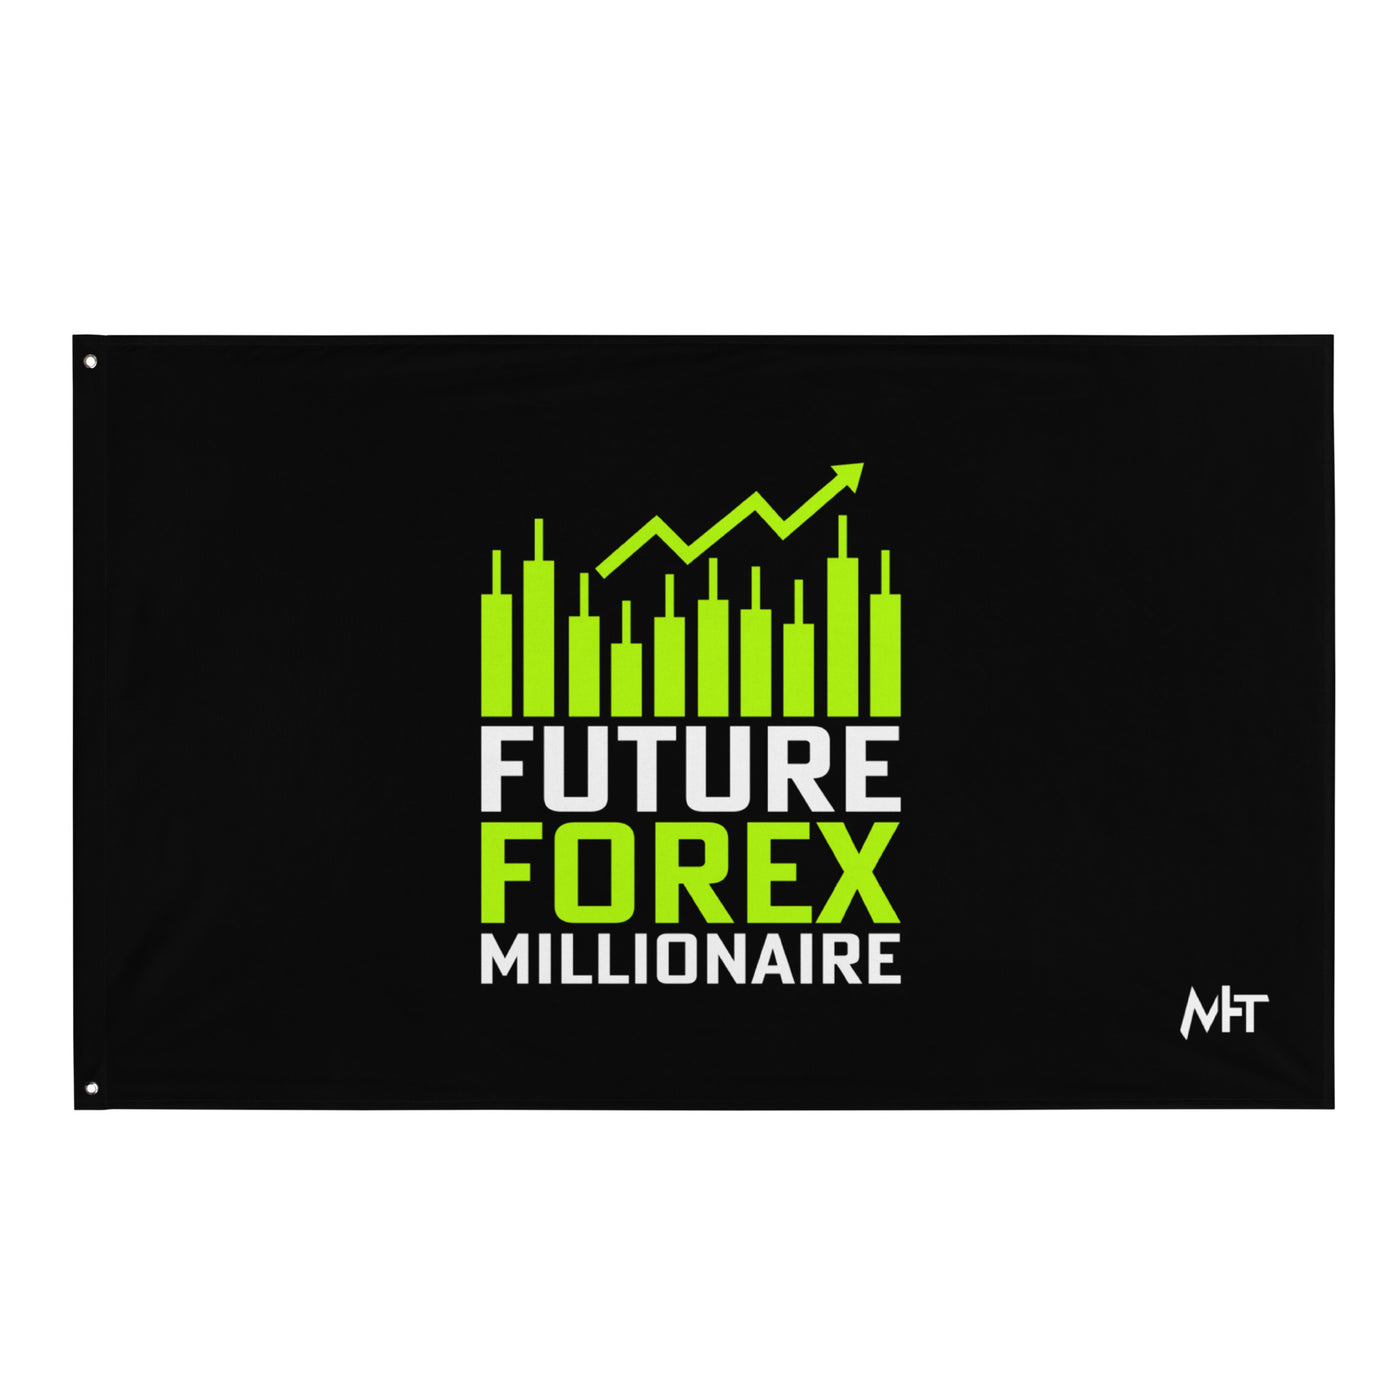 Future Forex Millionaire - Flag